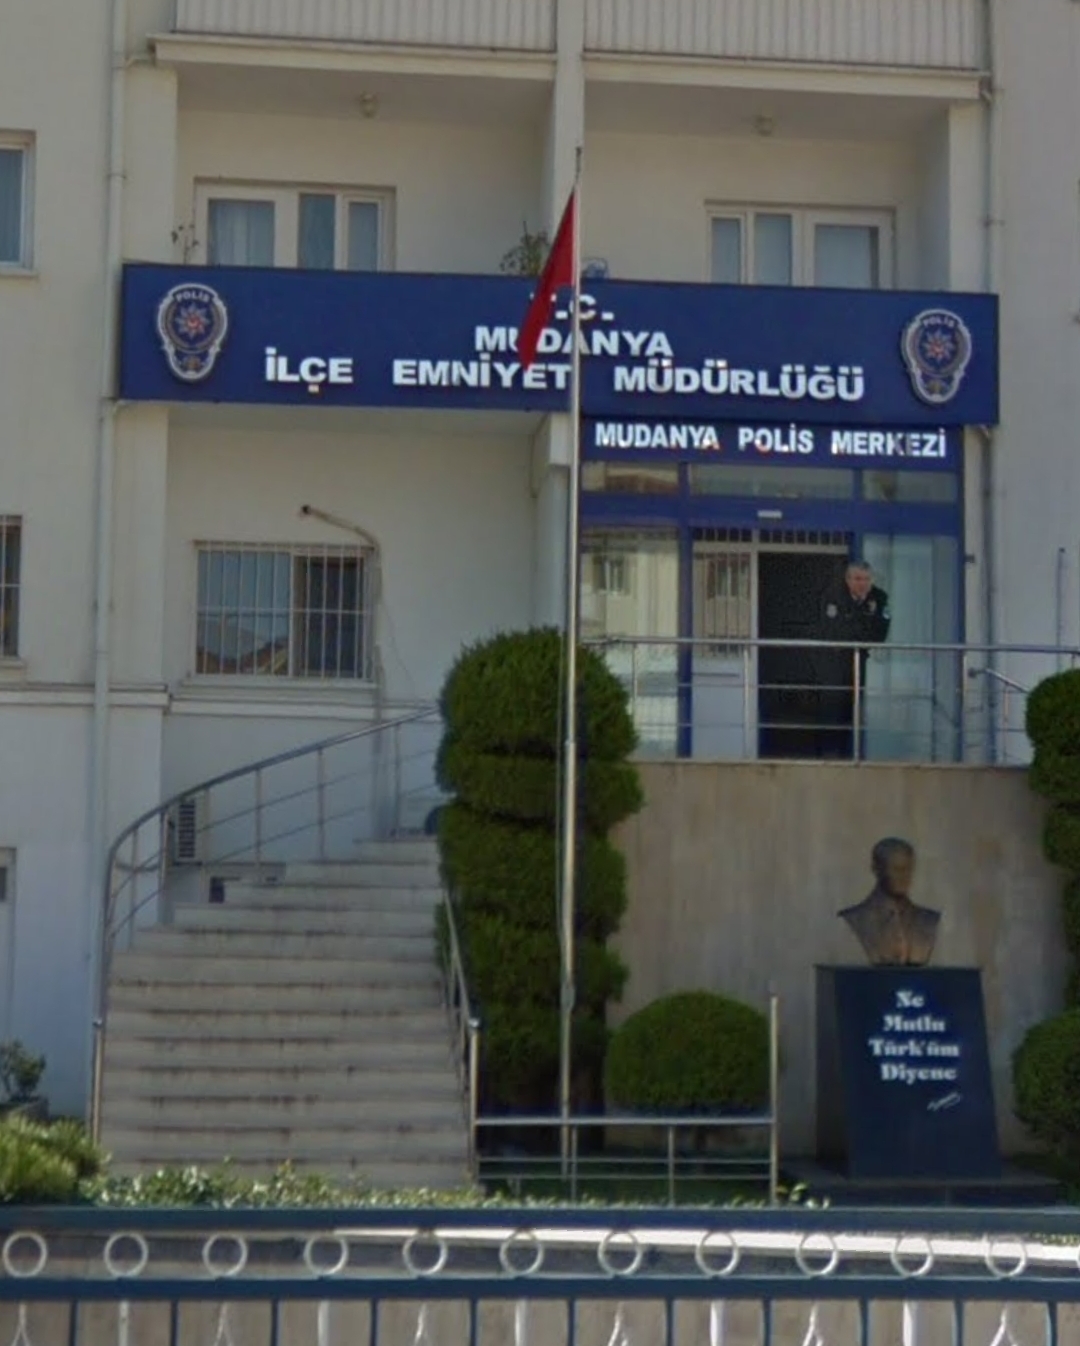 Mudanya Polis Merkezi Amirlii